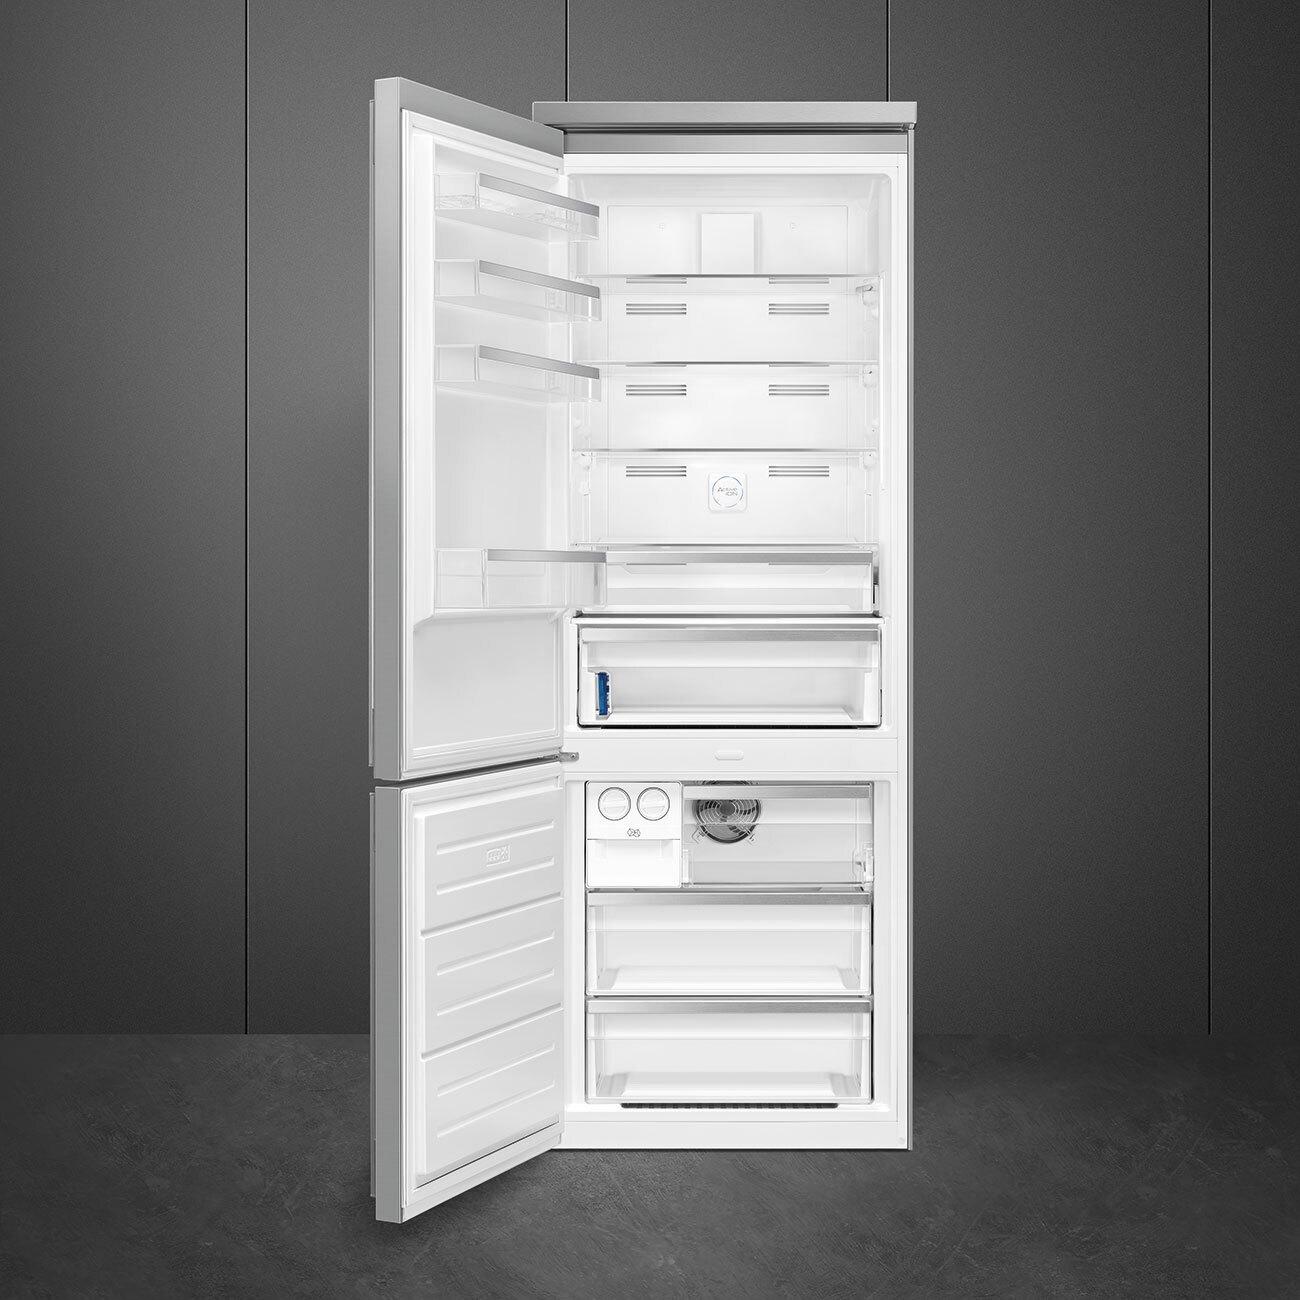 Smeg FA490ULX Refrigerator Stainless Steel Fa490Ulx